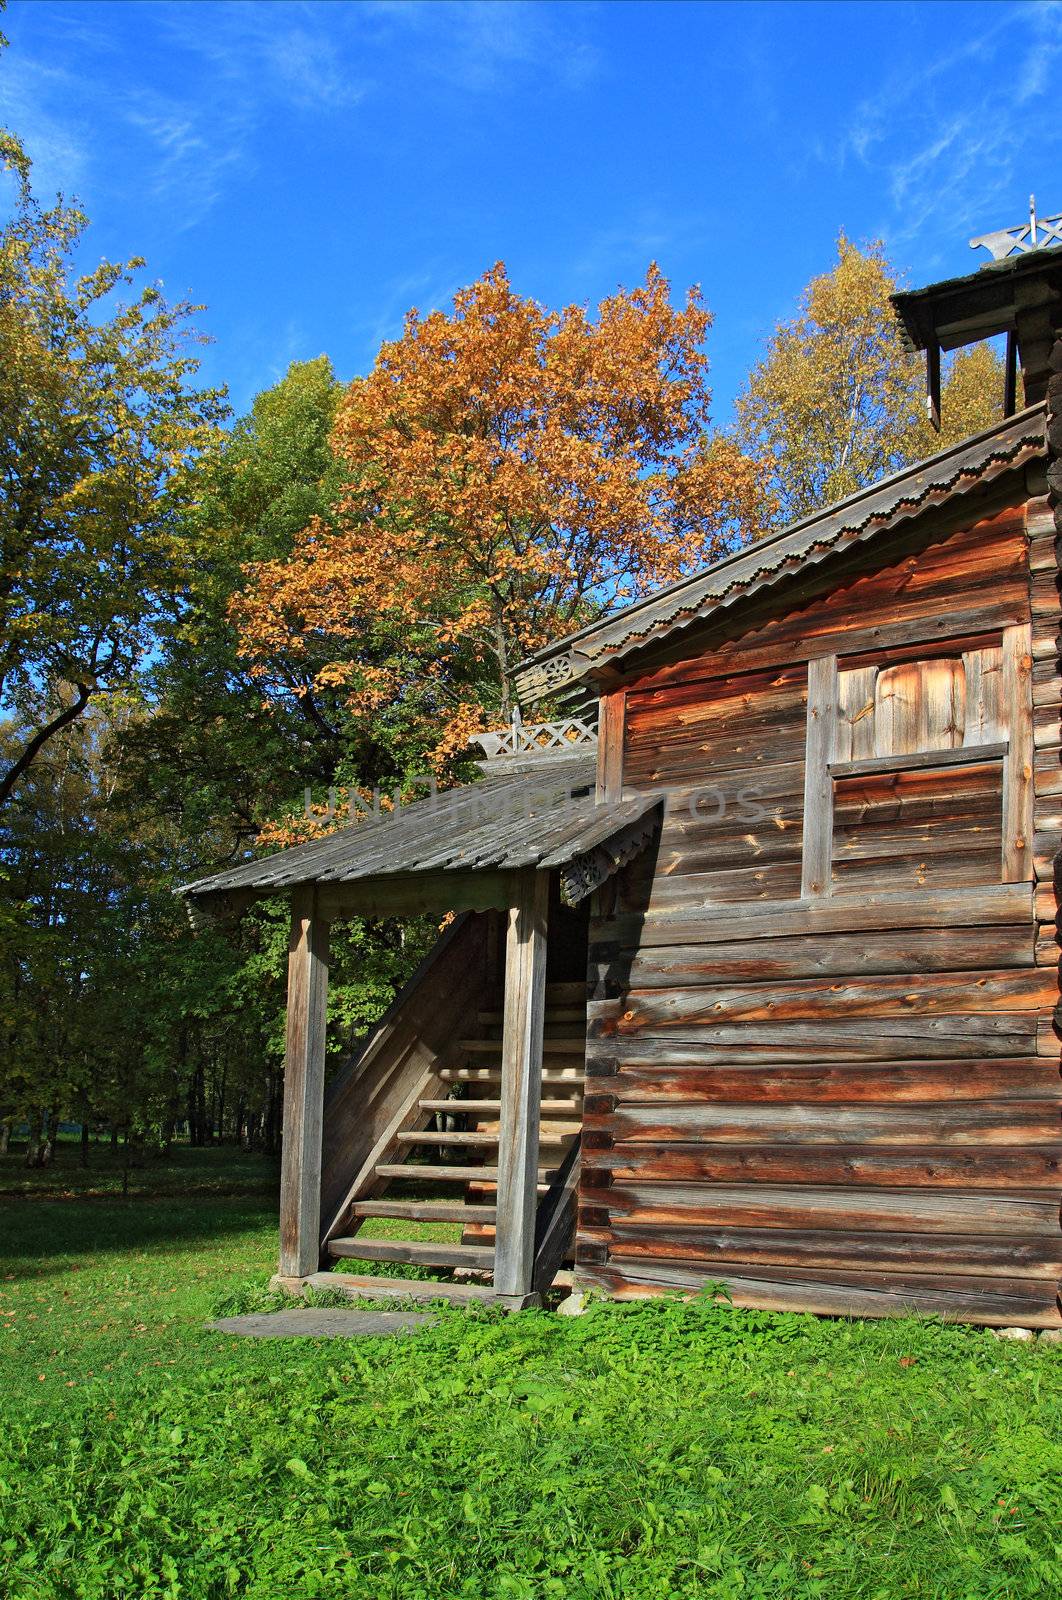 rural wooden house amongst autumn wood